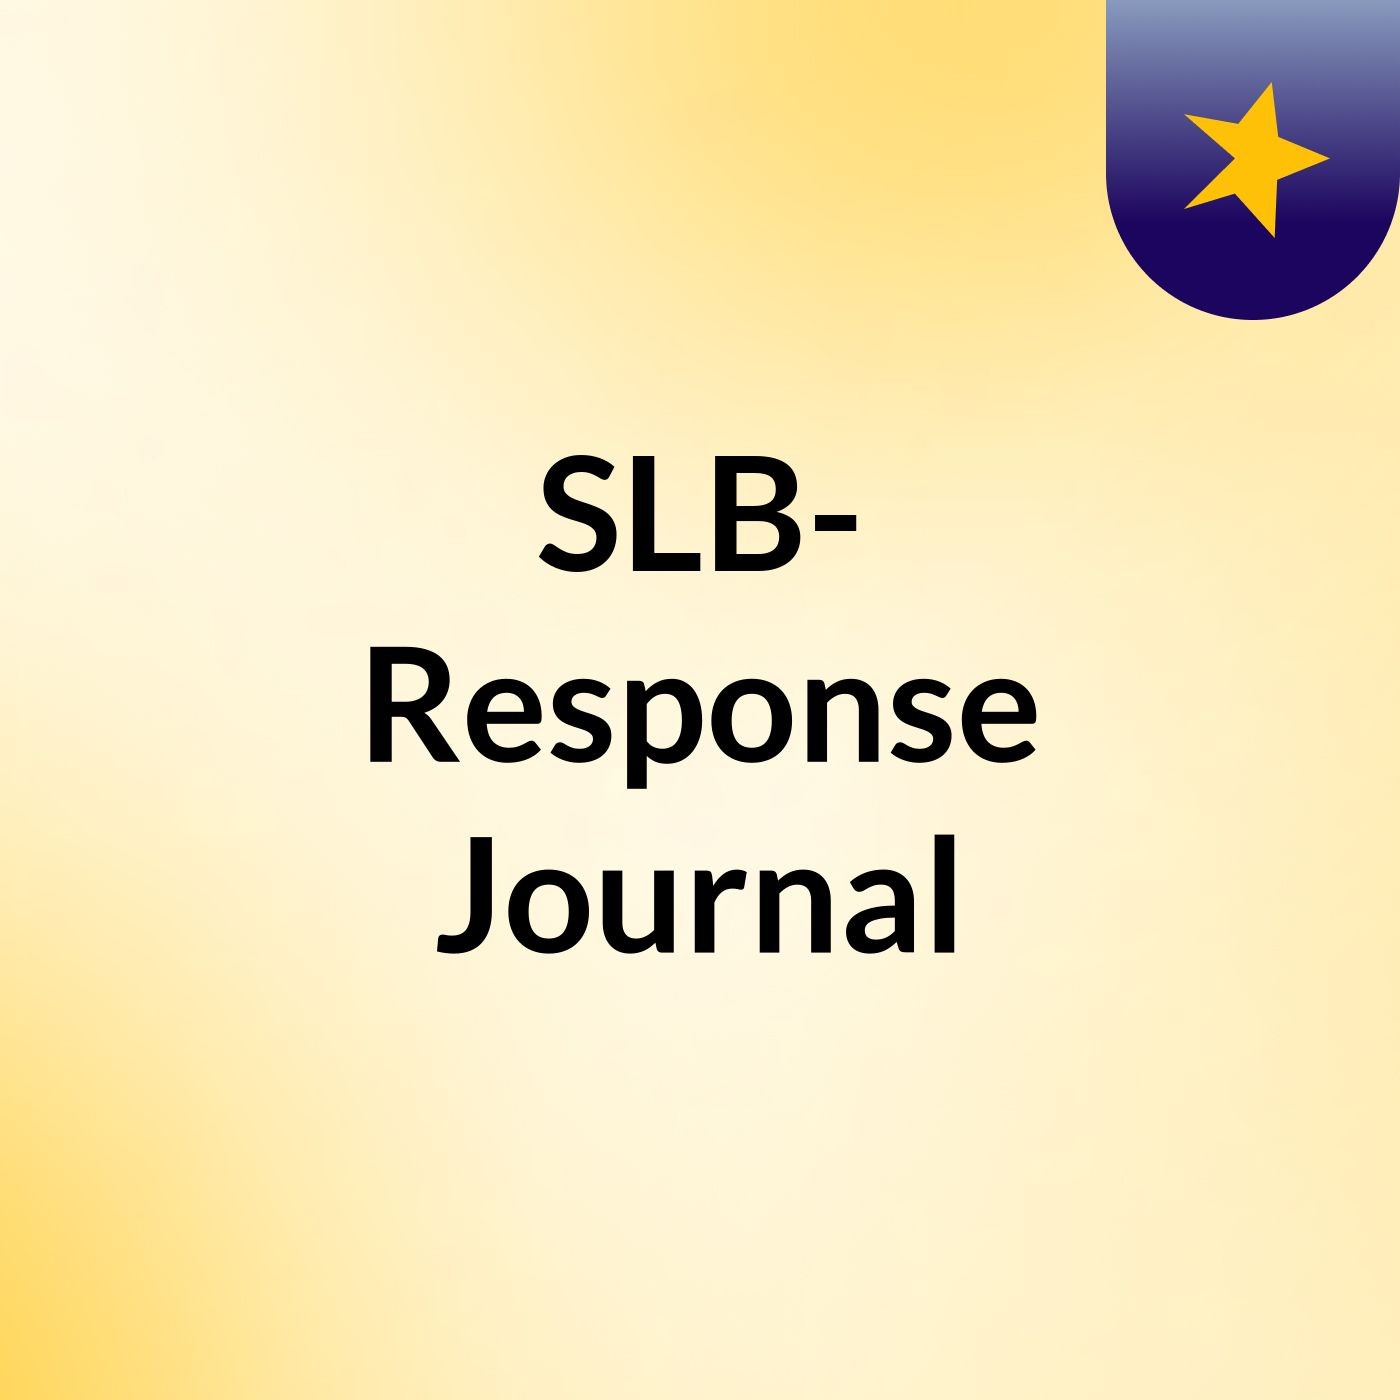 SLB- Response Journal